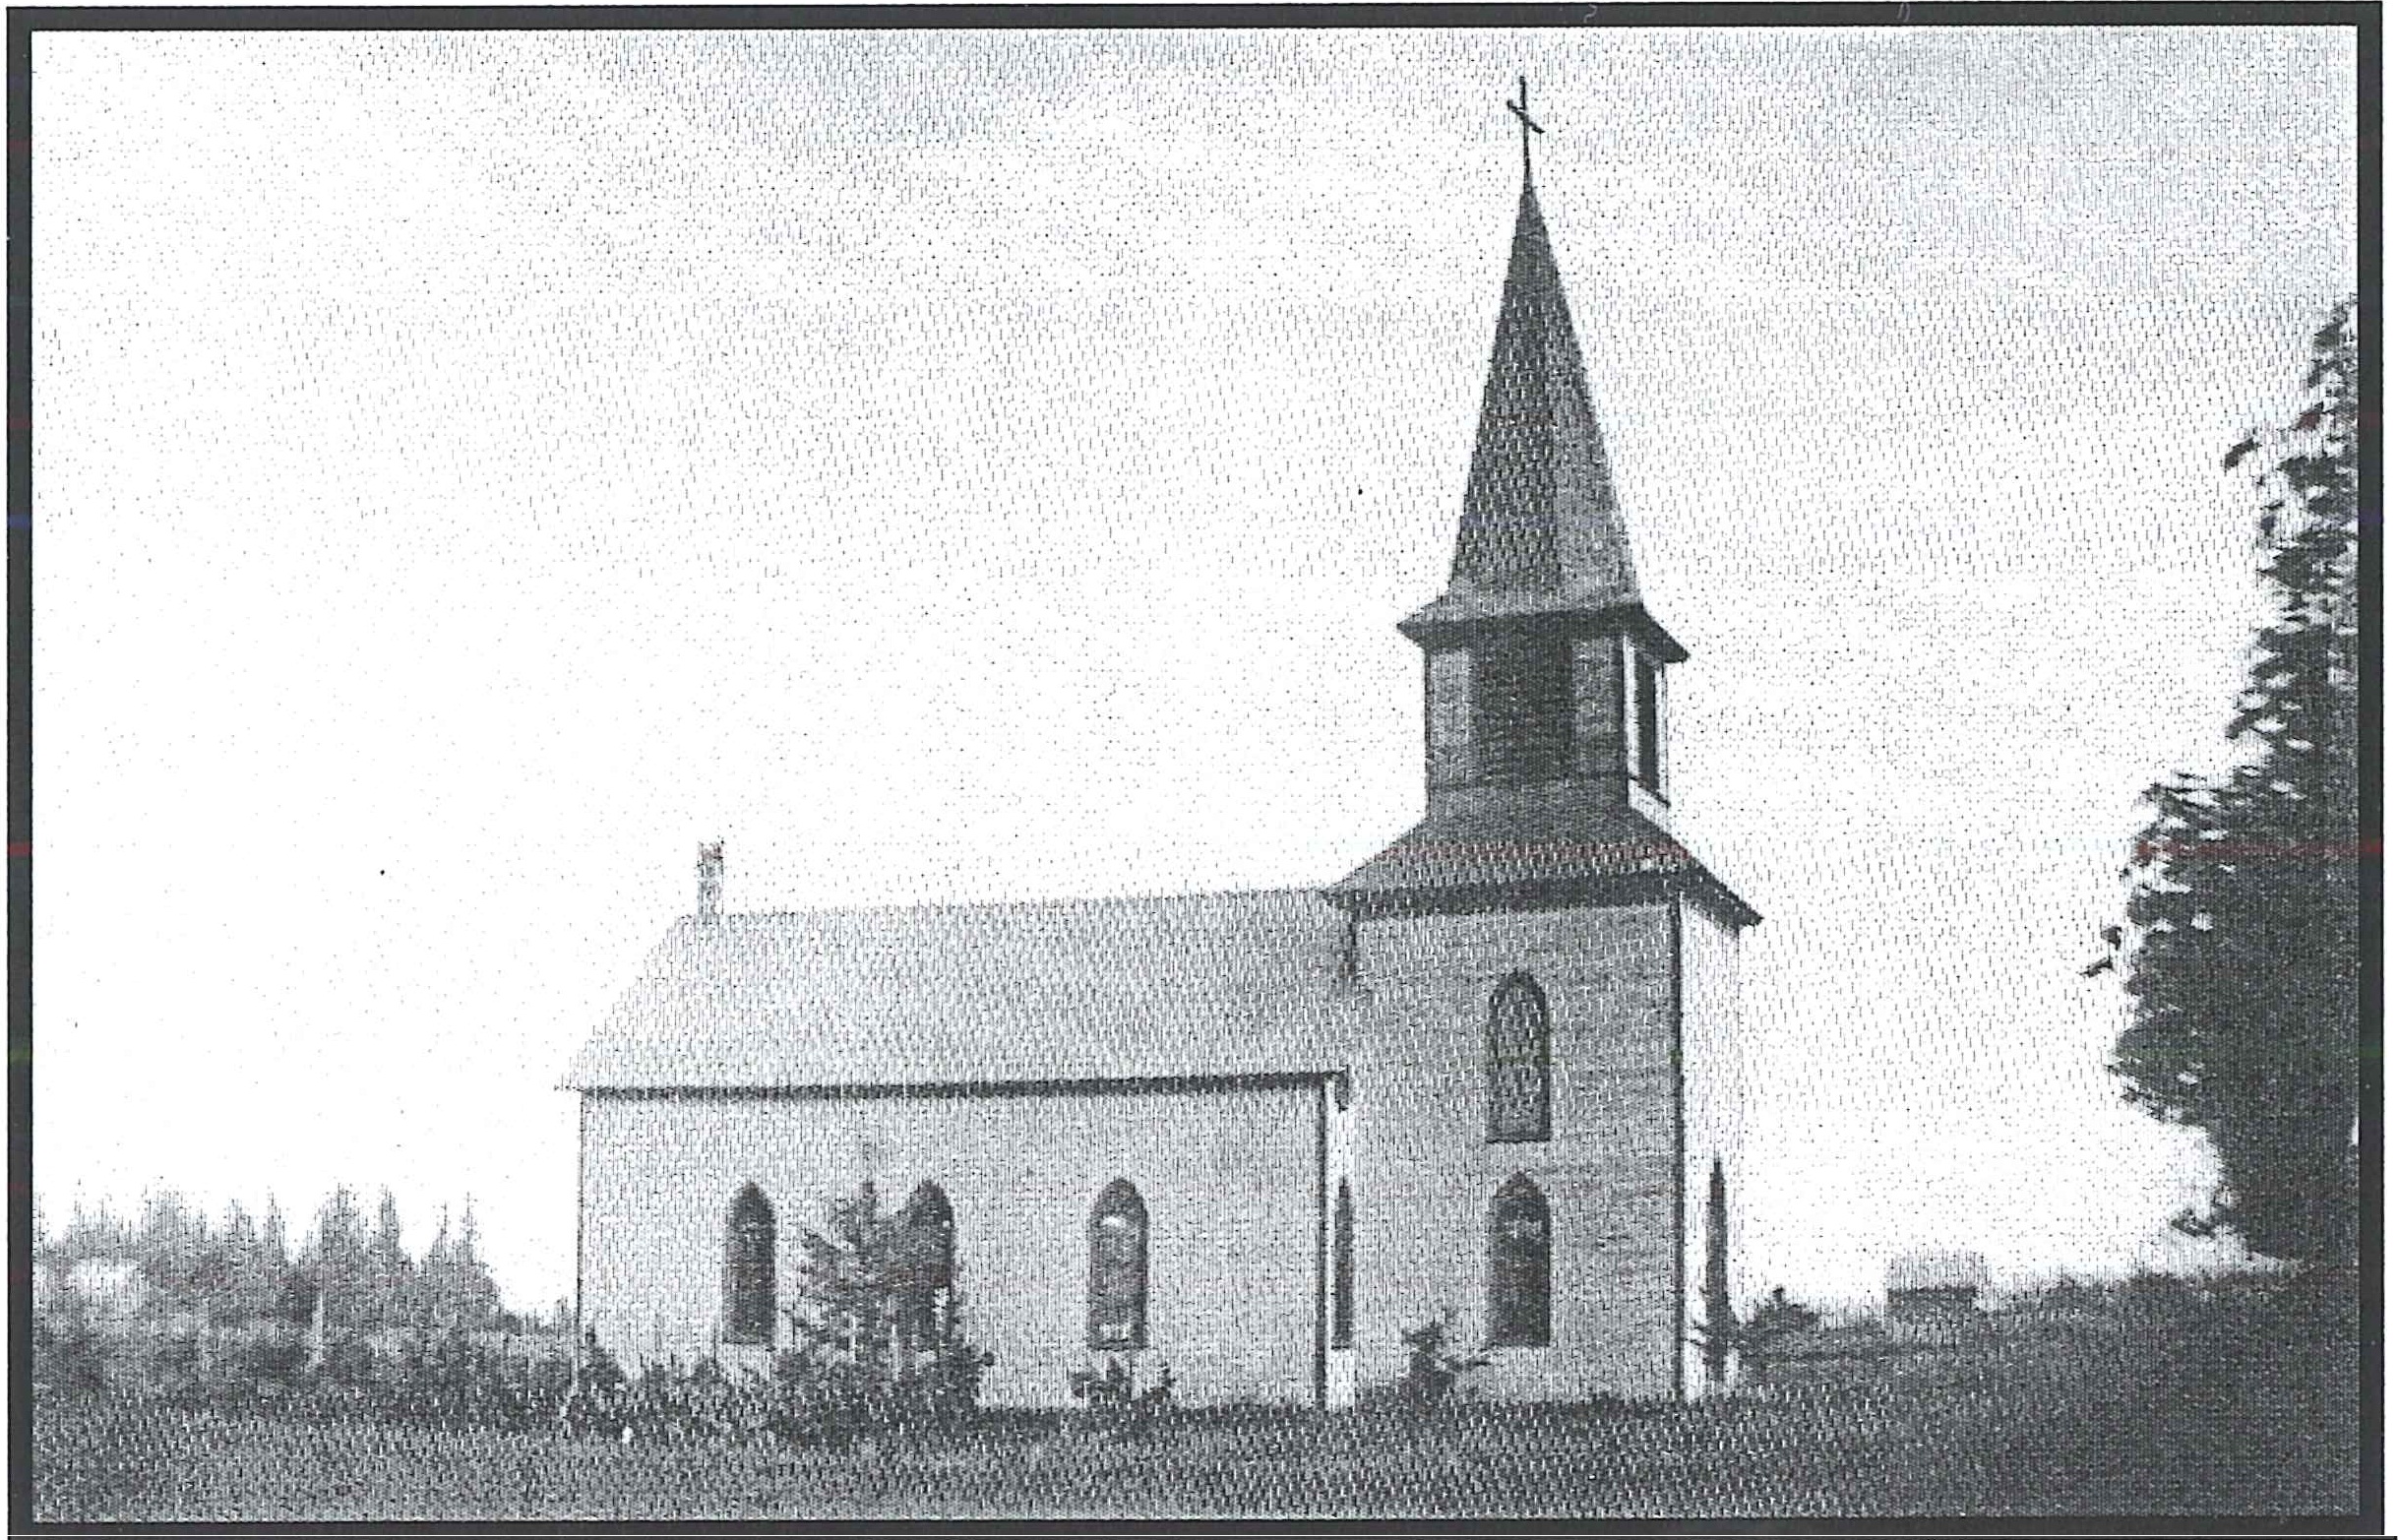 St. Peter's Lutheran Church 1882 building